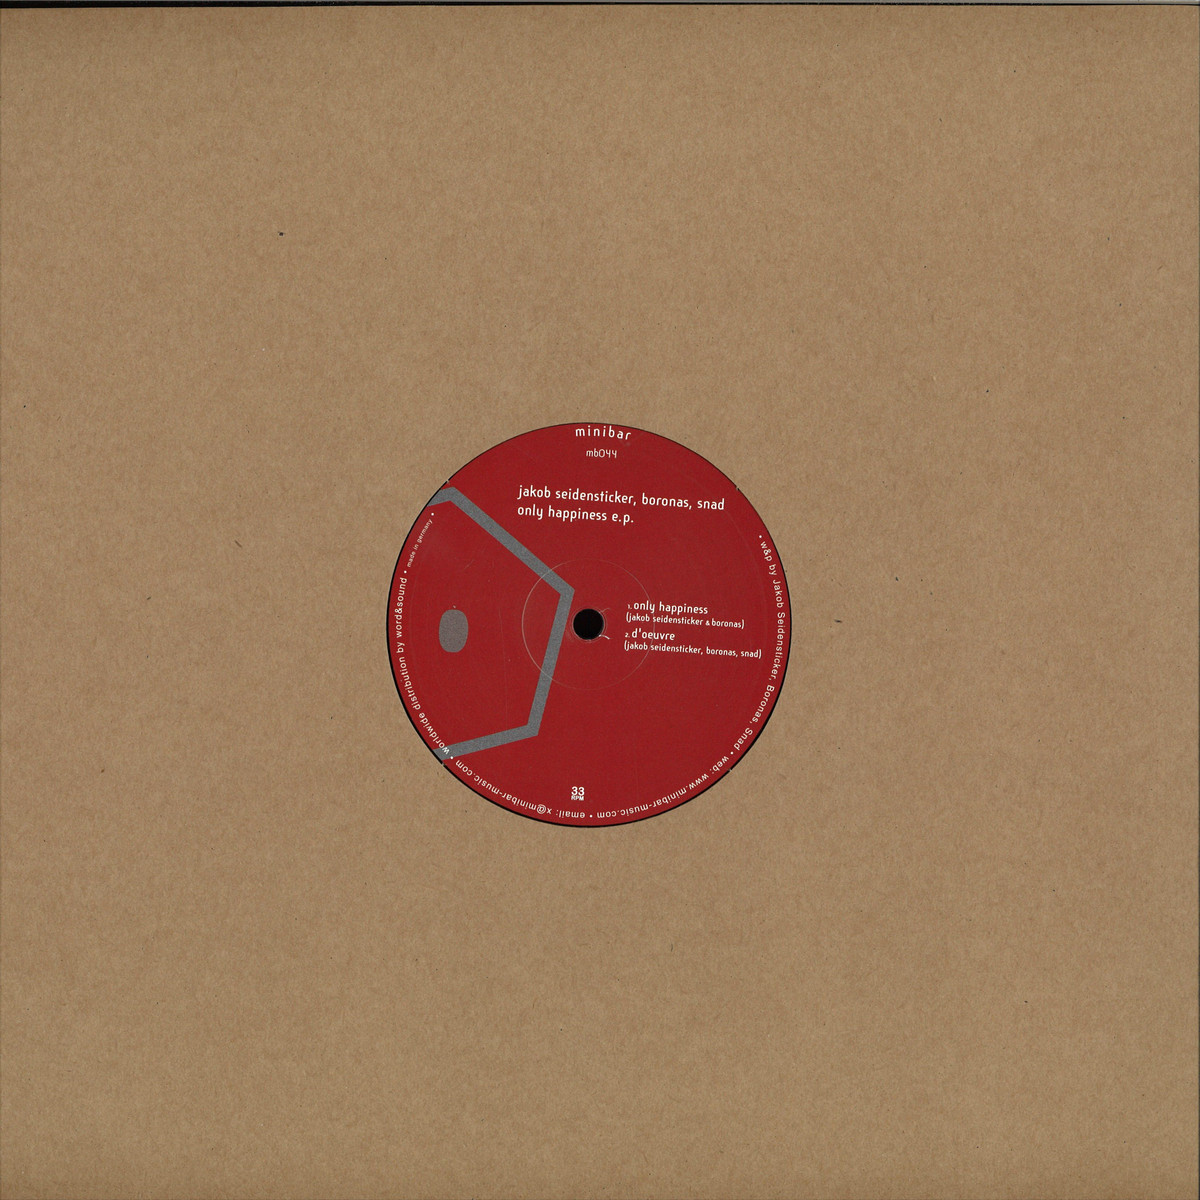 Jakob Seidensticker, Boronas & Snad - Only Happiness Ep / Minibar  MINIBAR044 - Vinyl